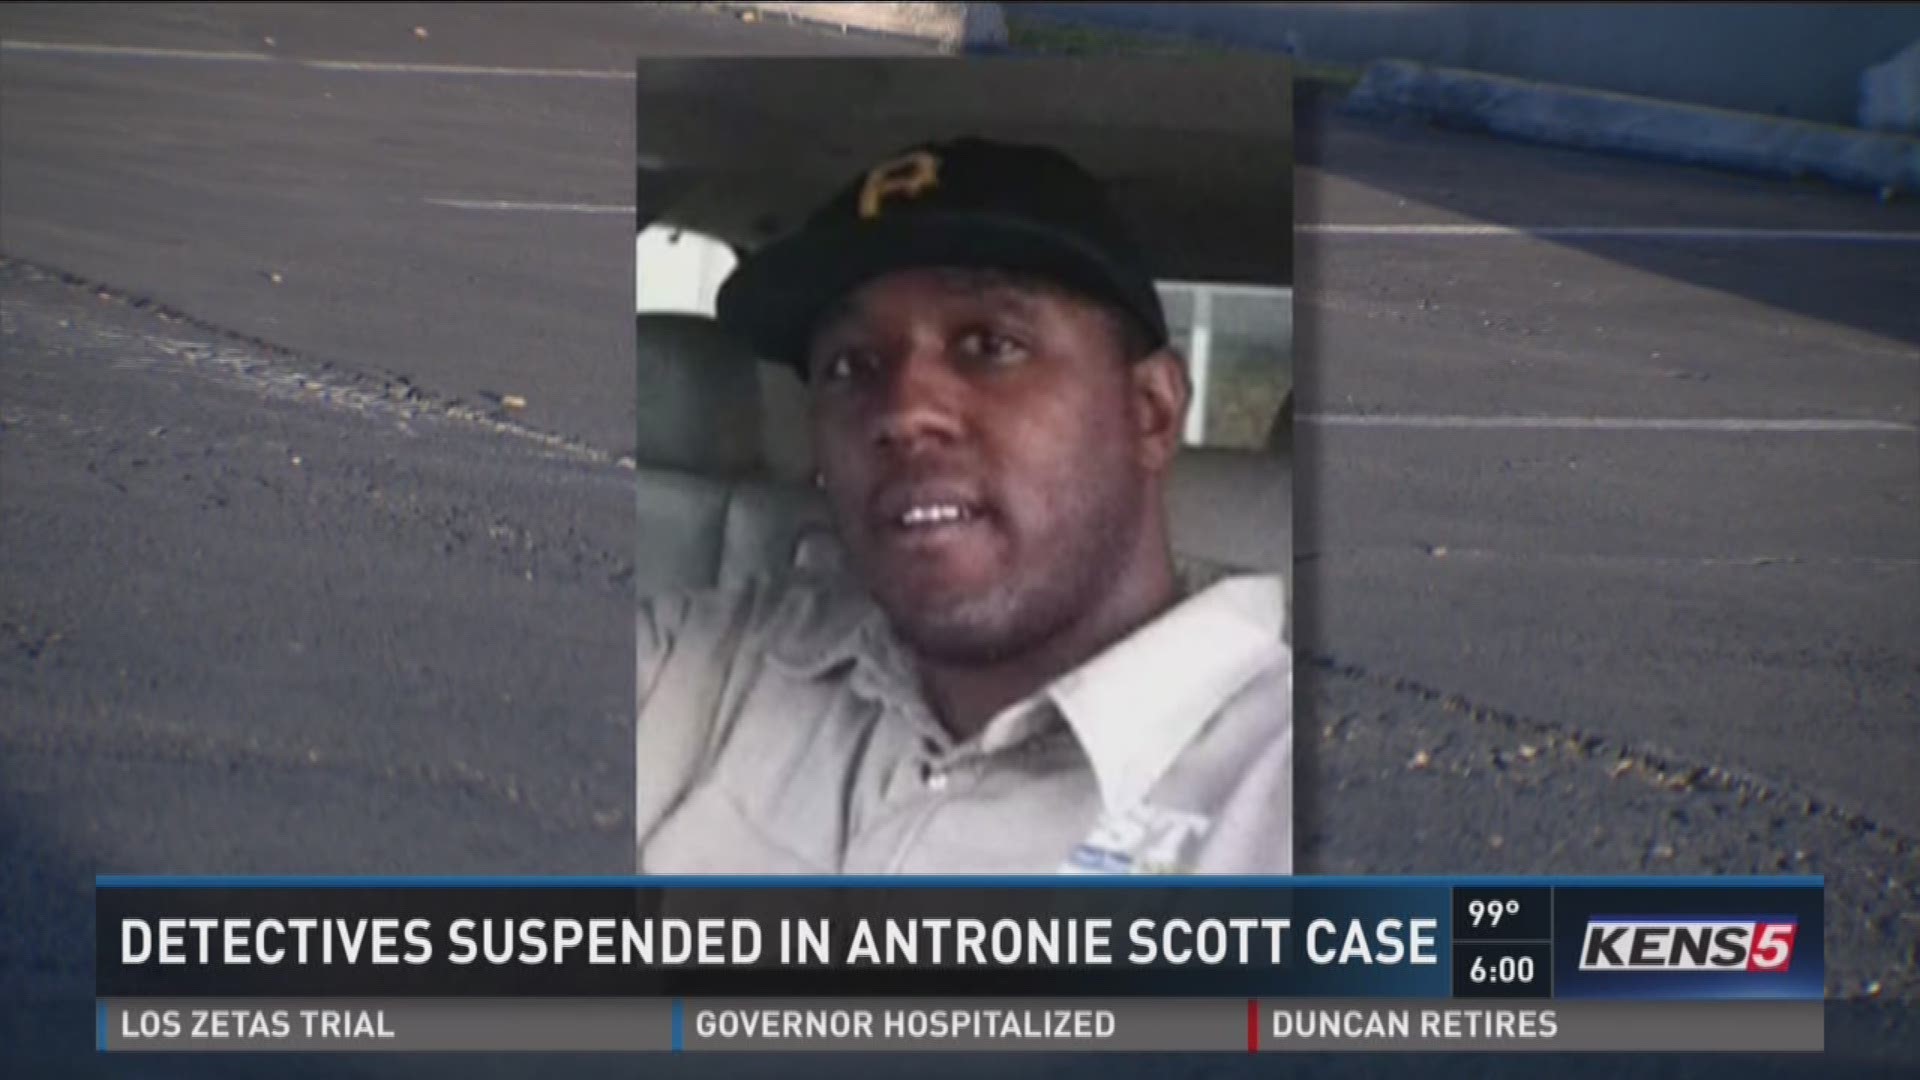 Detectives suspended in Antronie Scott case